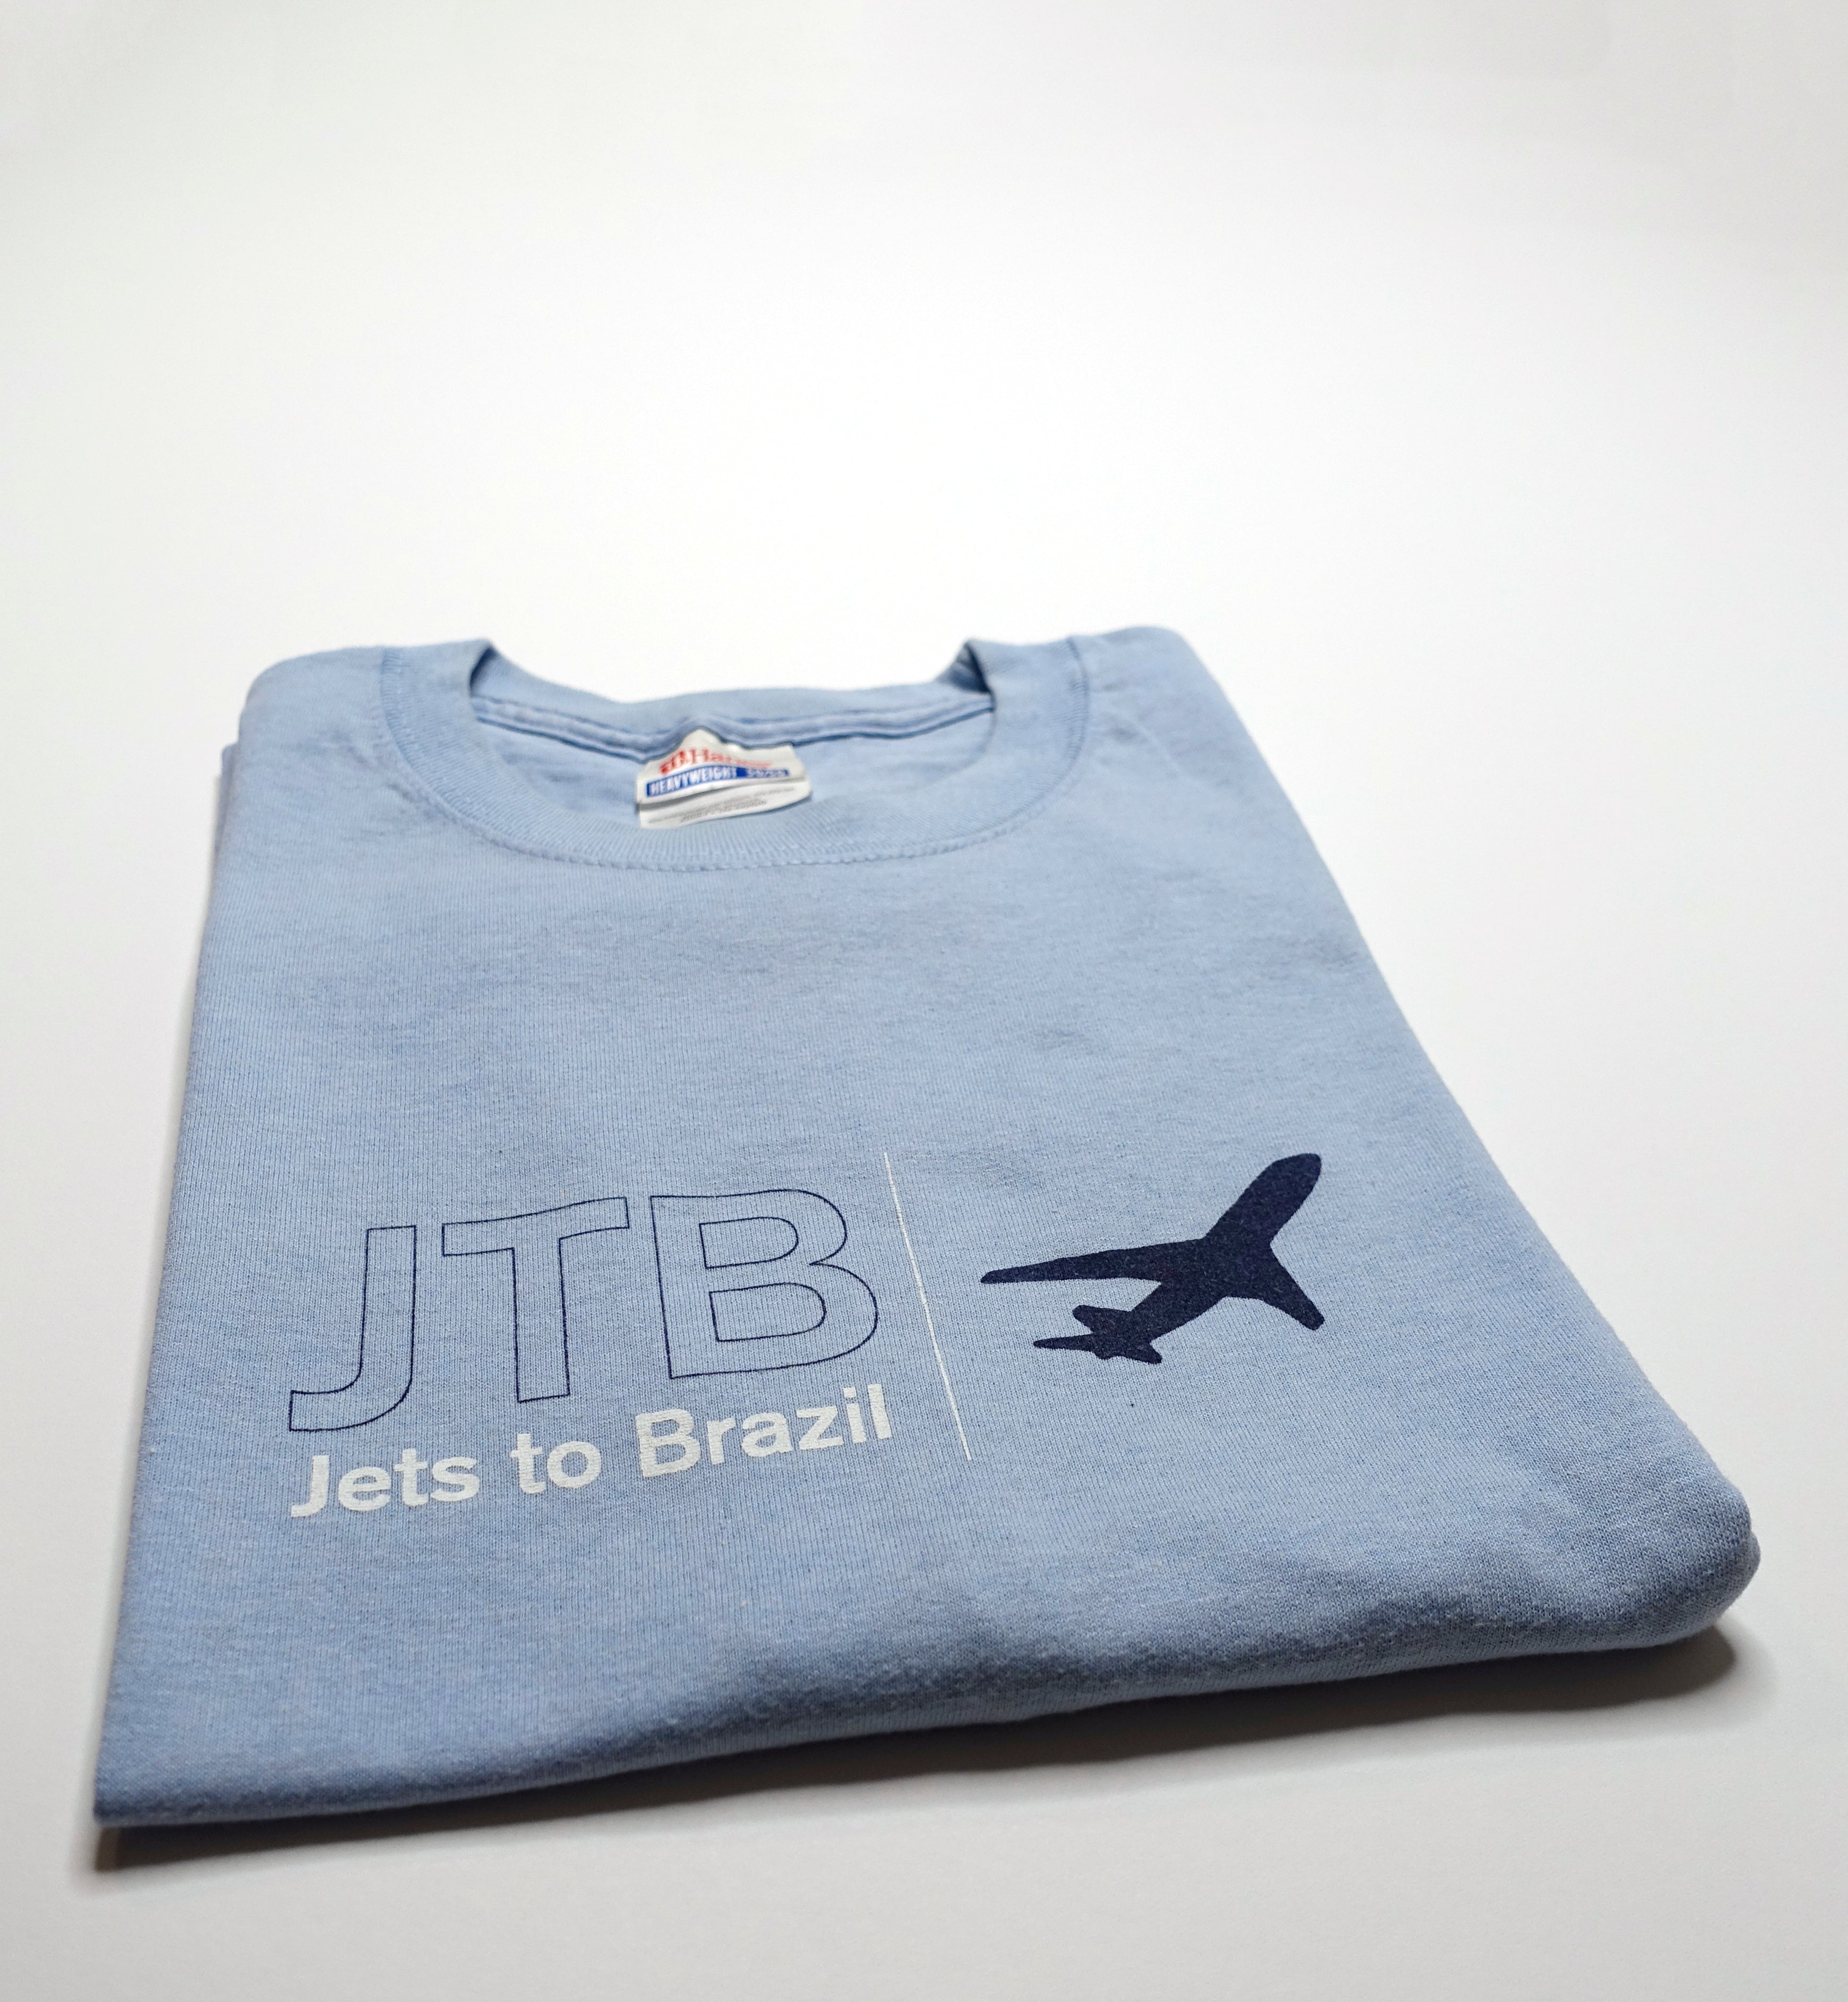 Jets To Brazil - JTB Airlines Tour Shirt Size Large